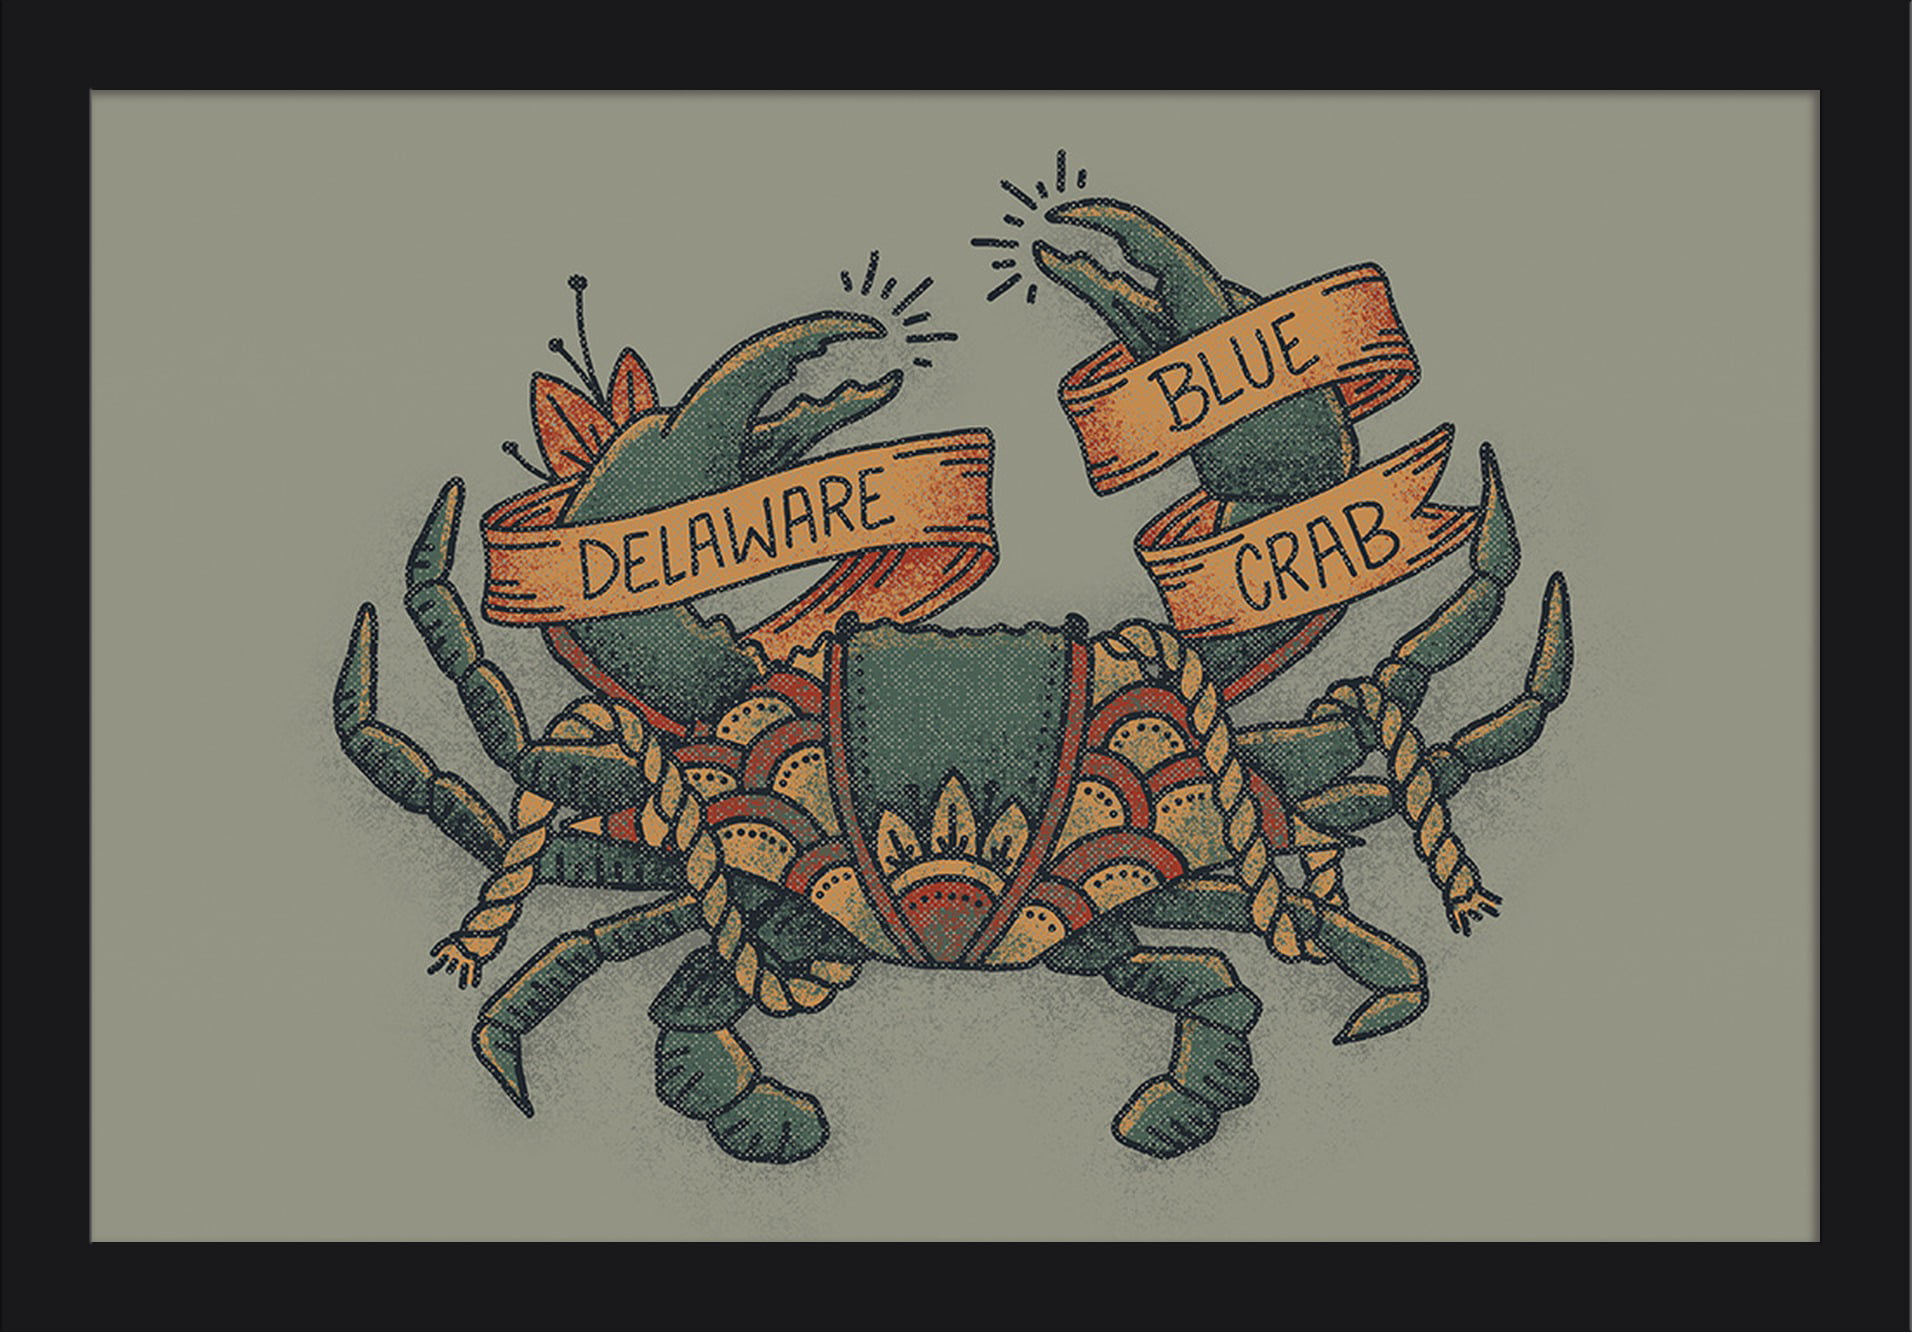 Amazon.com : 4 x 'Zodiac Cancer Crab' Temporary Tattoos (TO00006467) :  Beauty & Personal Care